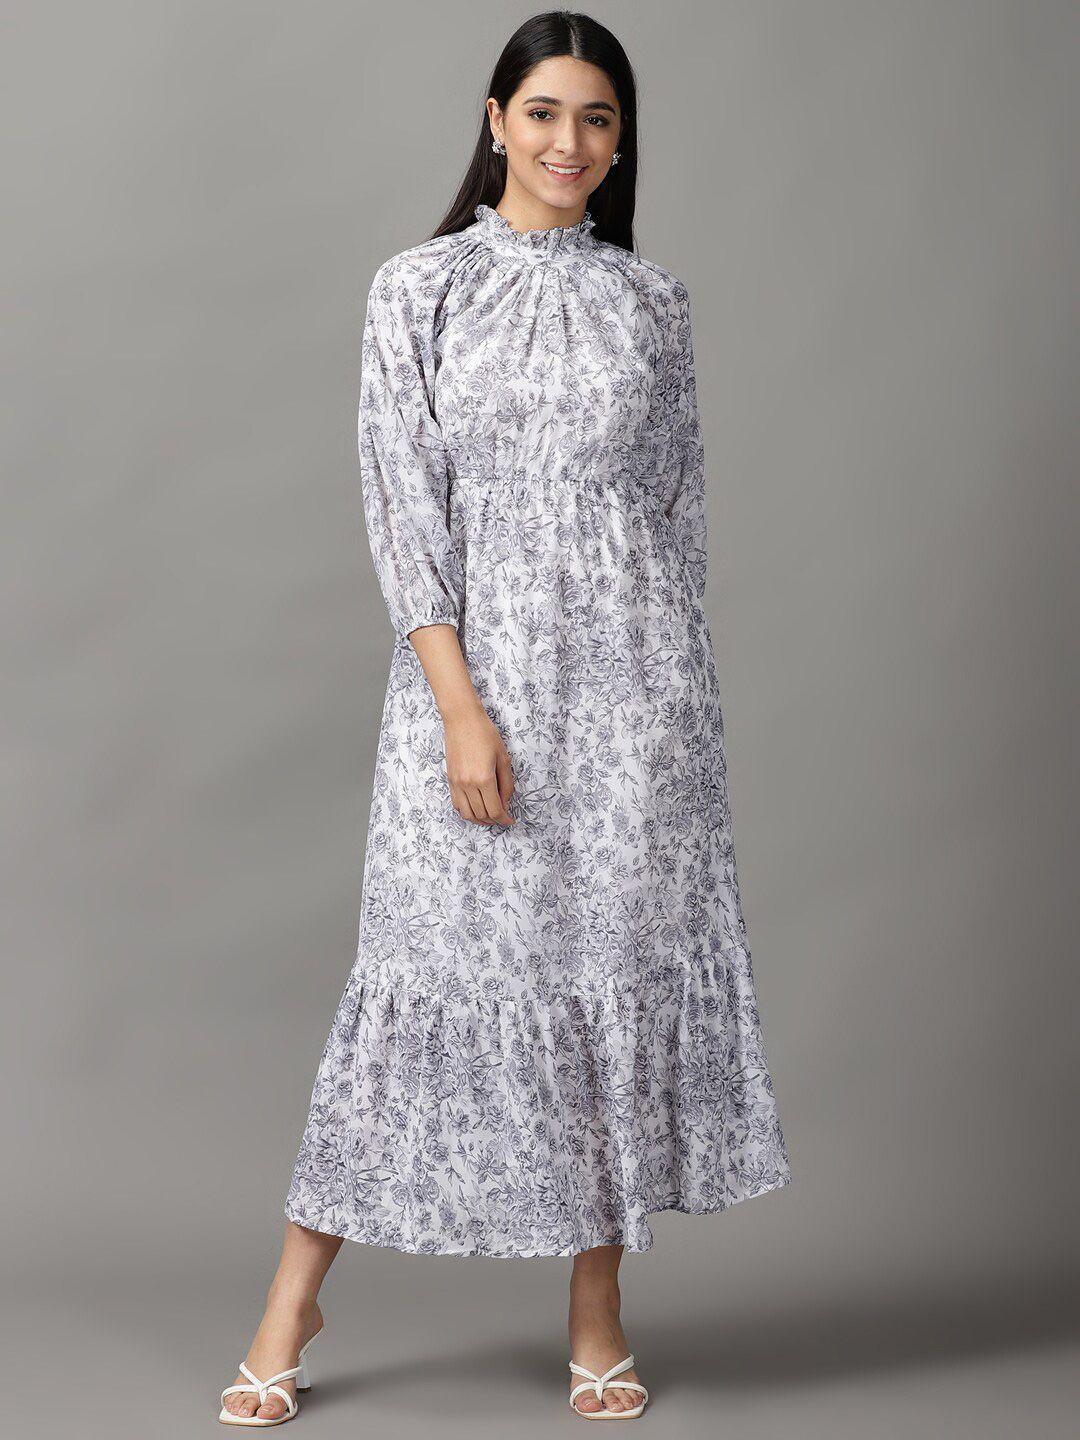 showoff white & grey floral printed maxi dress